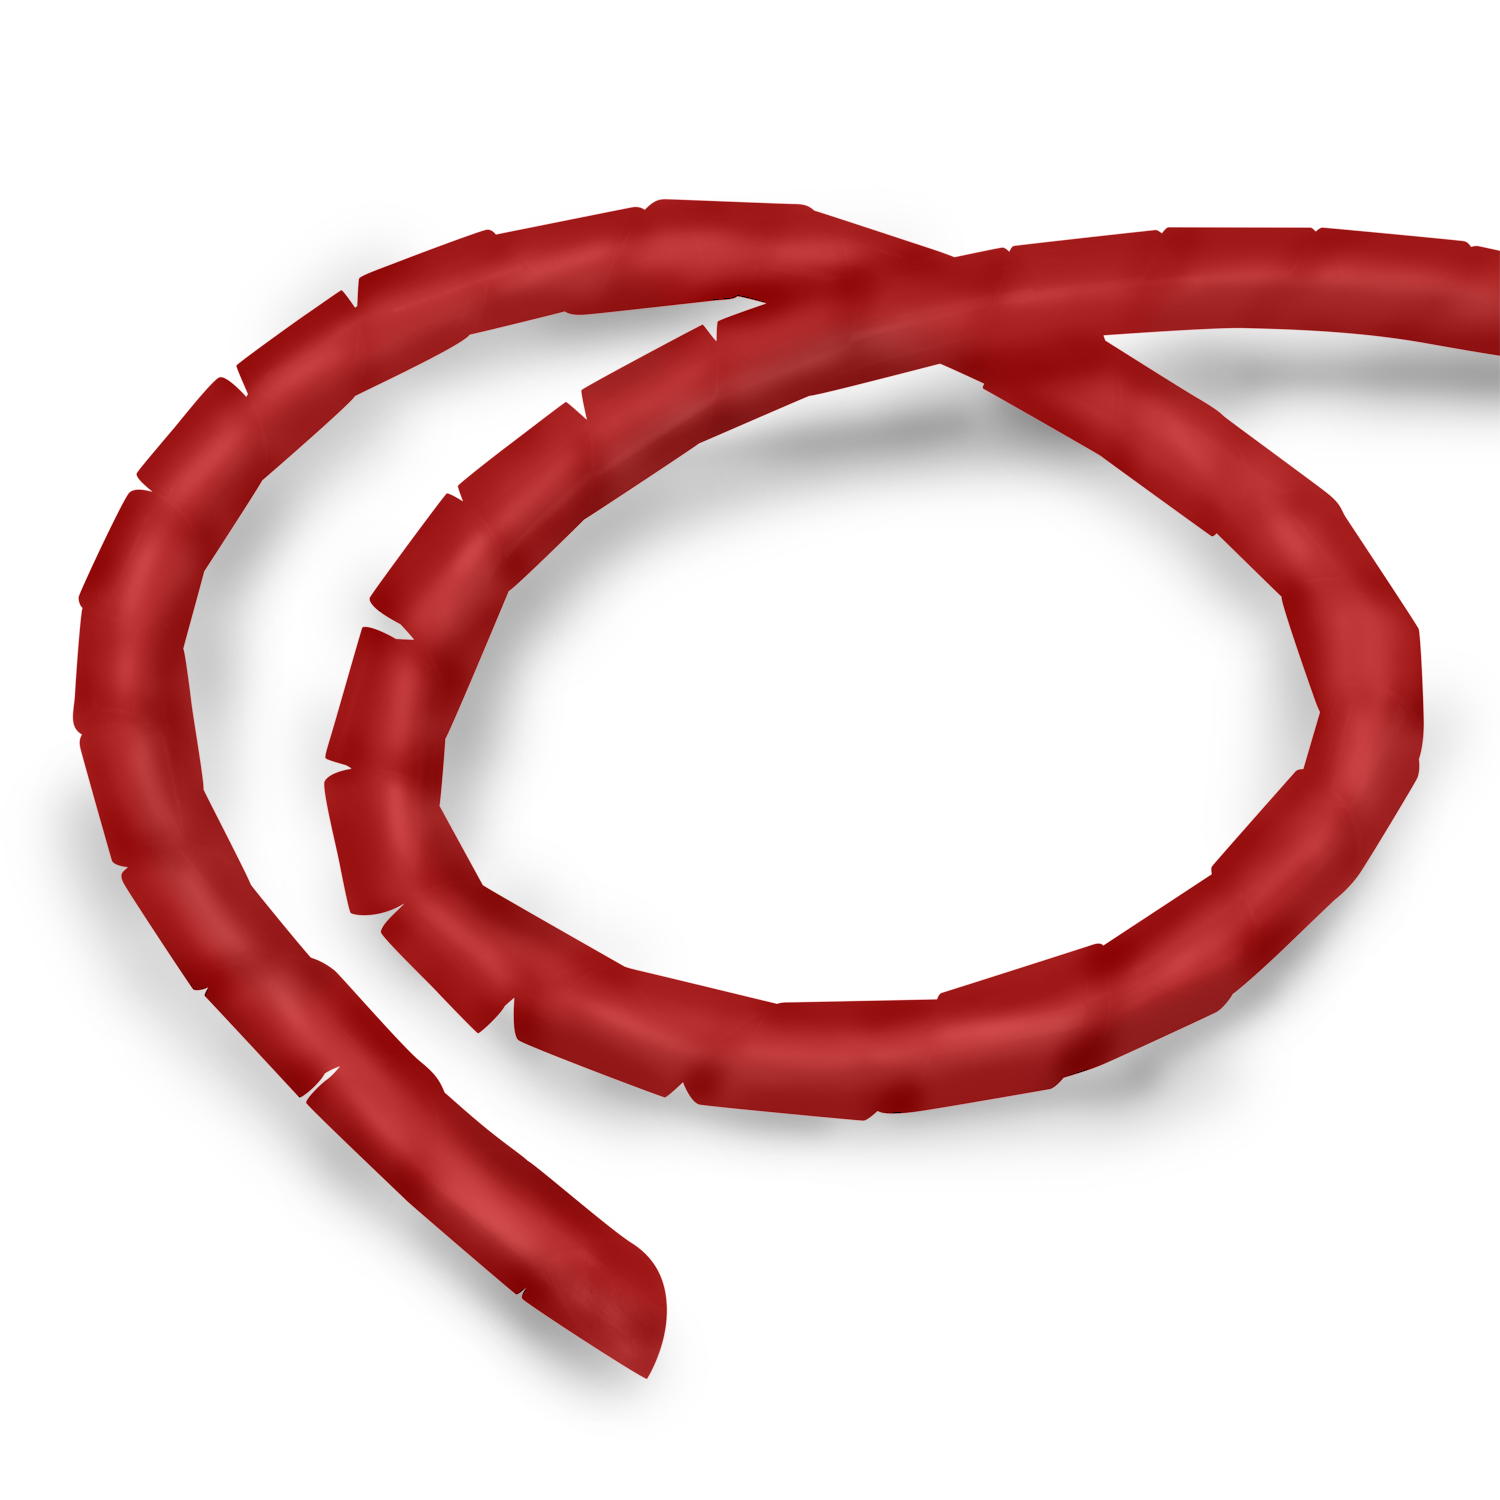 TPFNET 3er Pack Premium Spiral-Kabelschlauch Rot 4-50mm, Rot, Kabelschlauch, 10m